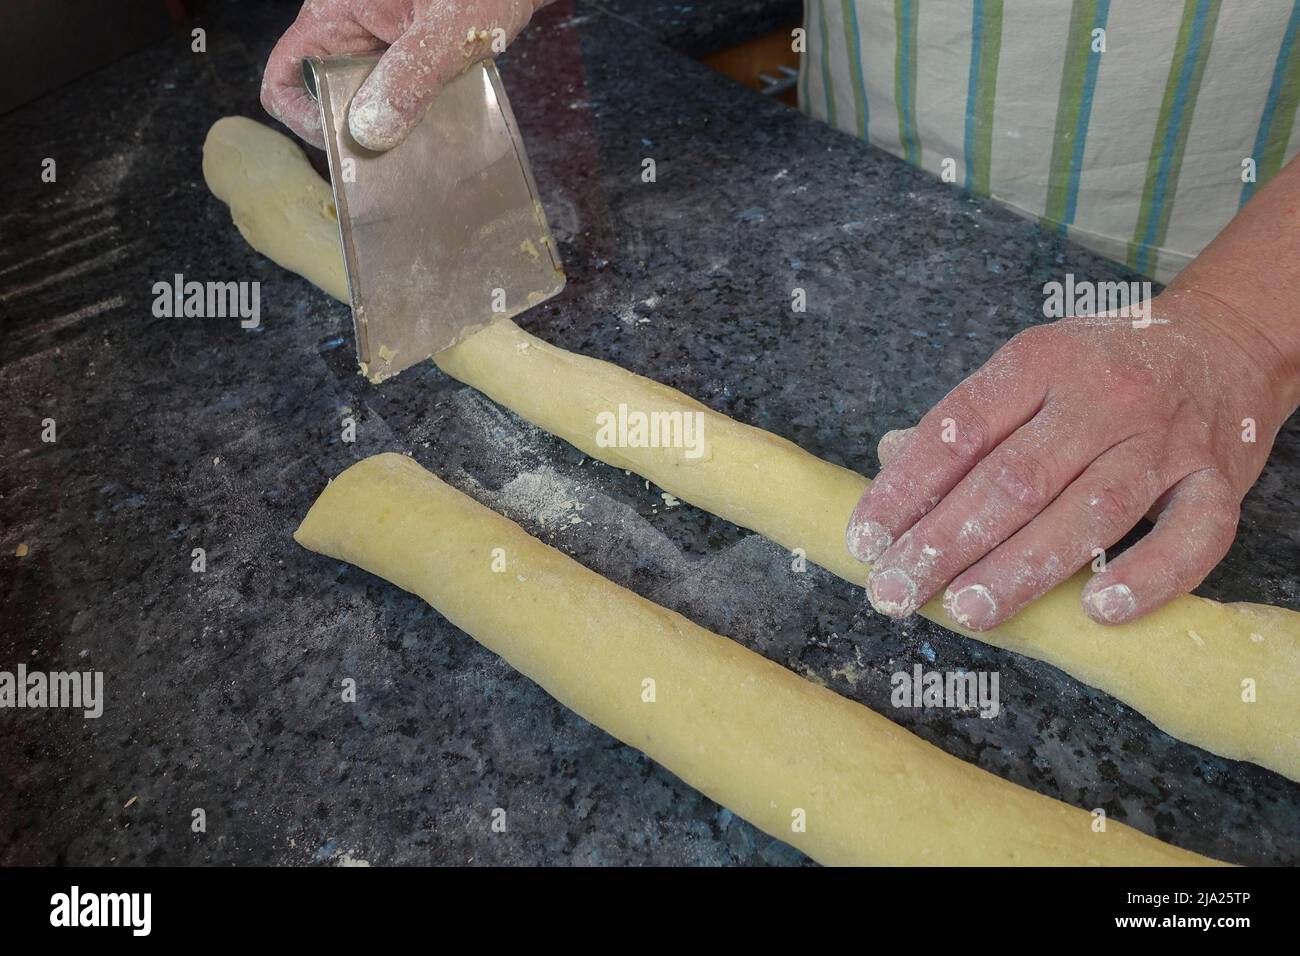 https://c8.alamy.com/comp/2JA25TP/swabian-cuisine-preparing-bruckhoelzer-schlanganger-sperrknechte-made-of-potato-dough-dividing-dough-rolls-portioning-dough-scraper-making-2JA25TP.jpg